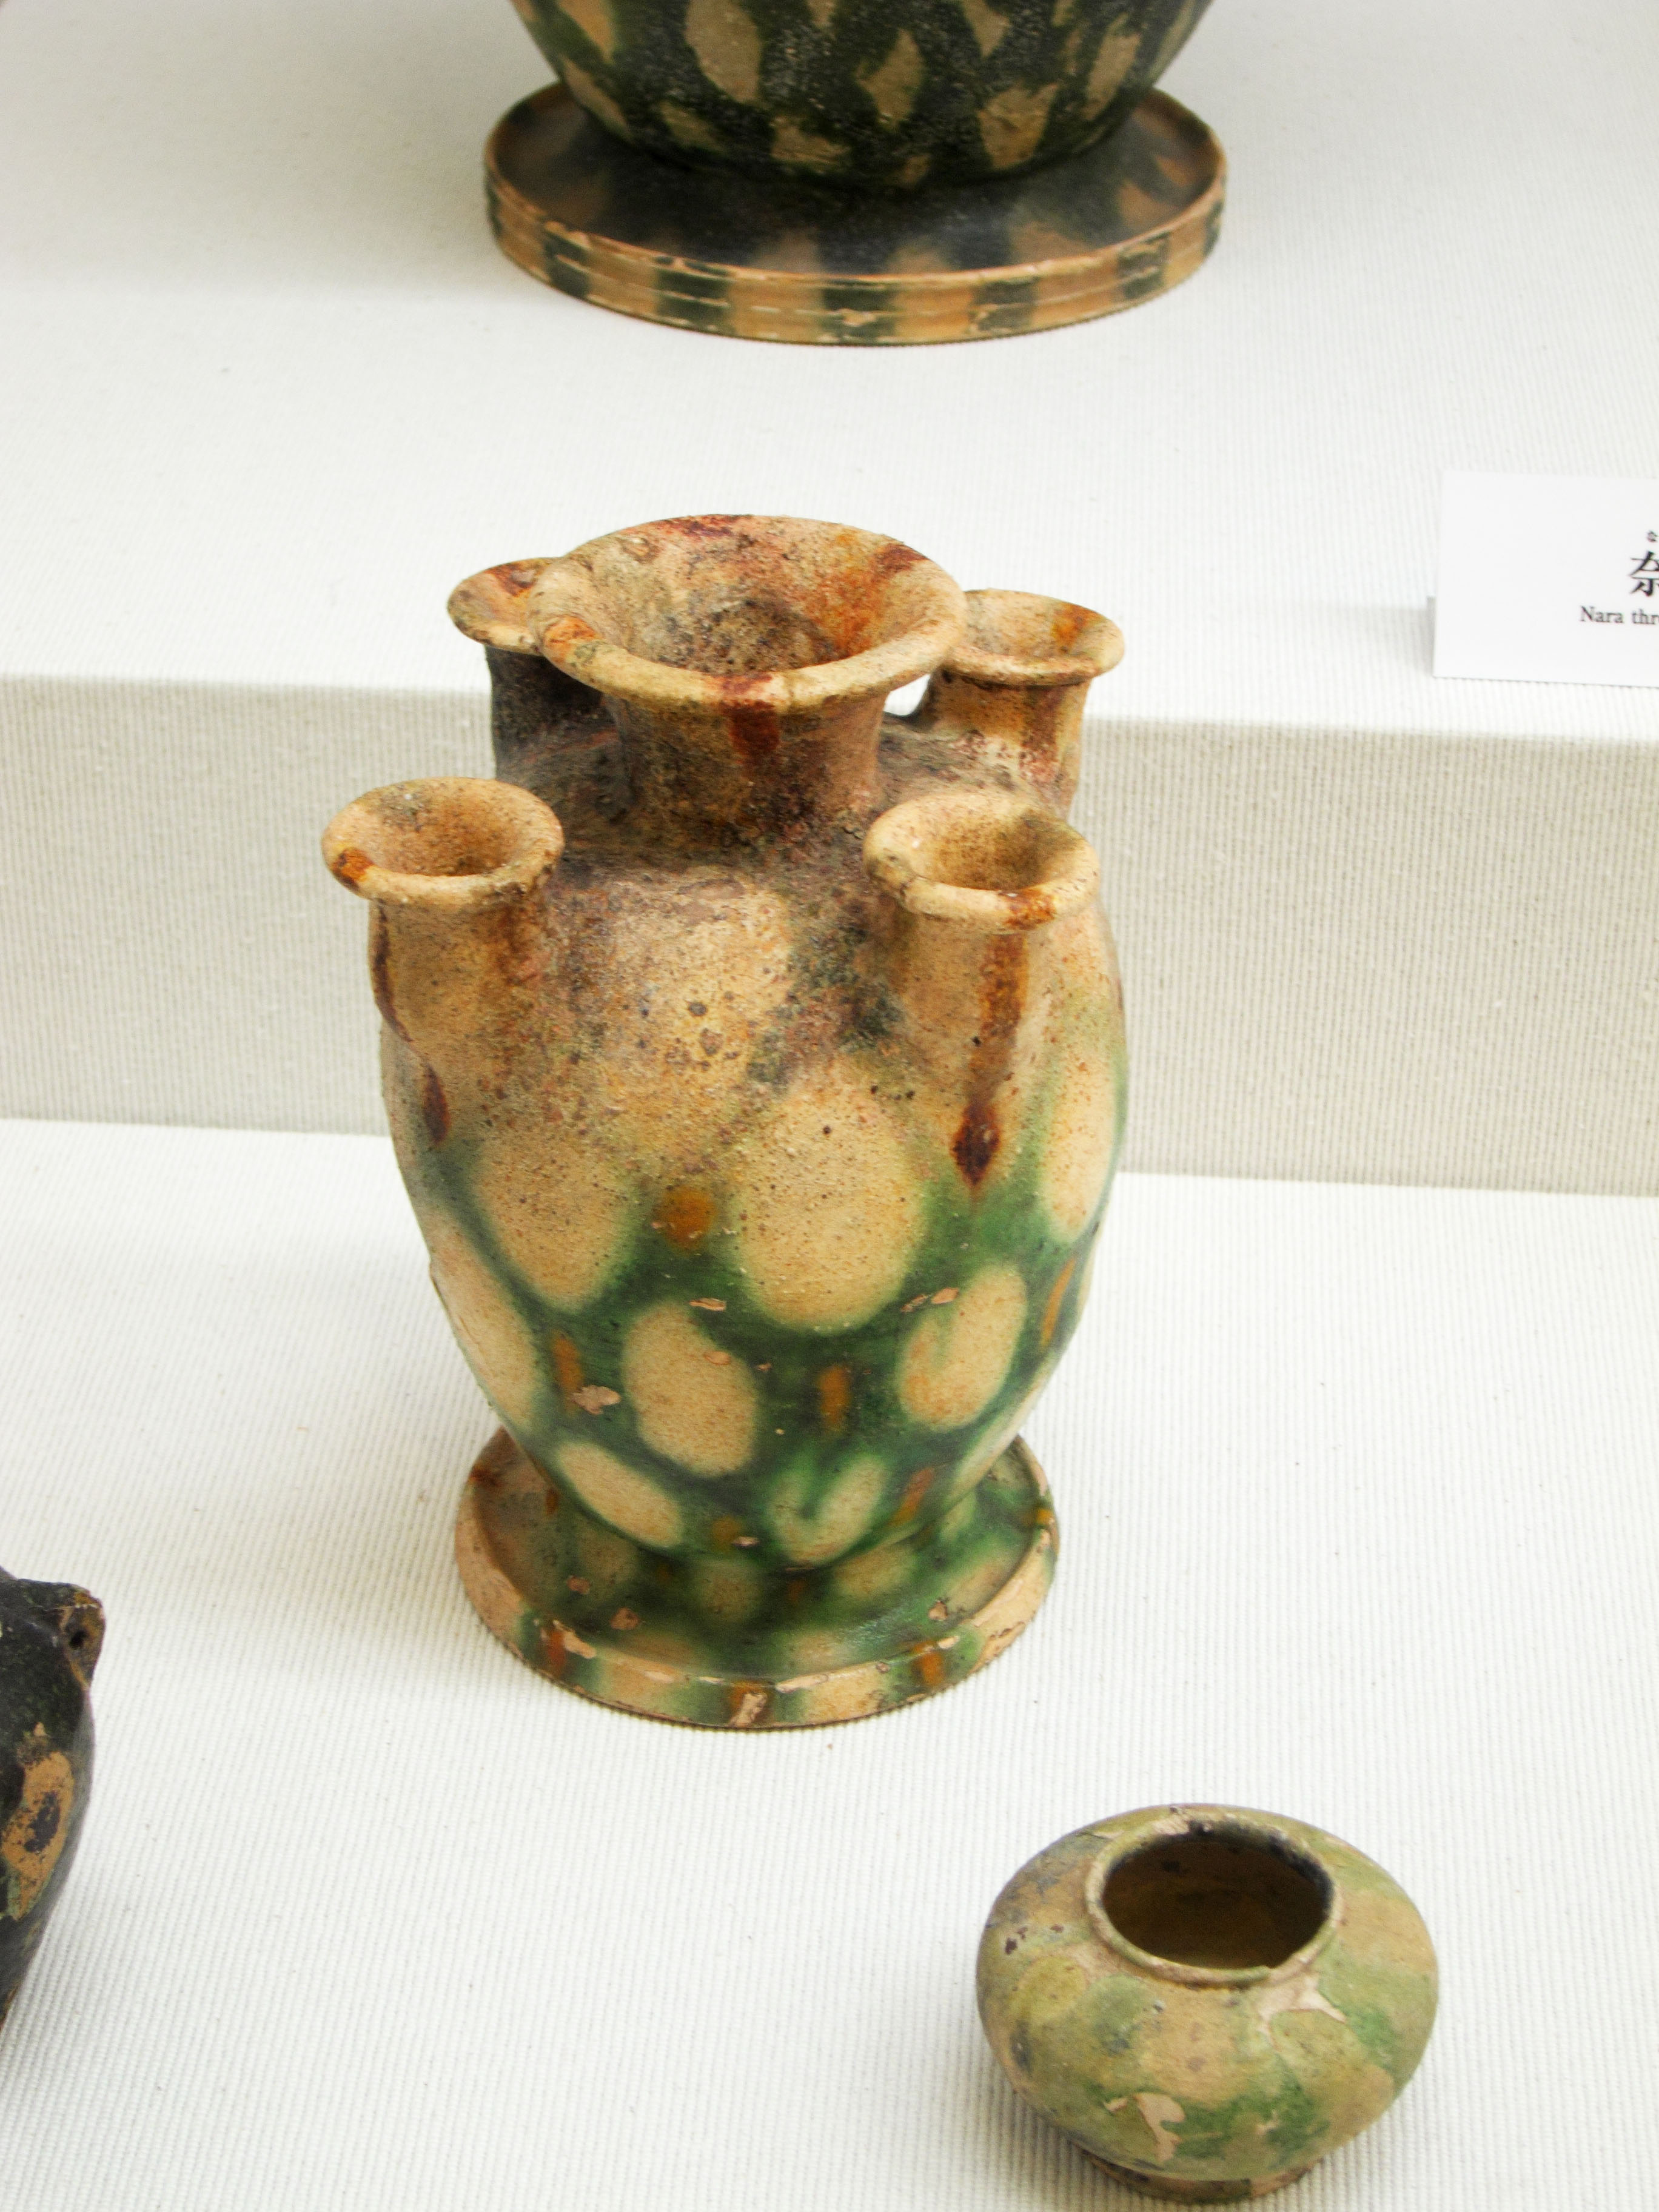 photo,material,free,landscape,picture,stock photo,Creative Commons,Nara ceramic ware, Remains, city, Ceramics, pot